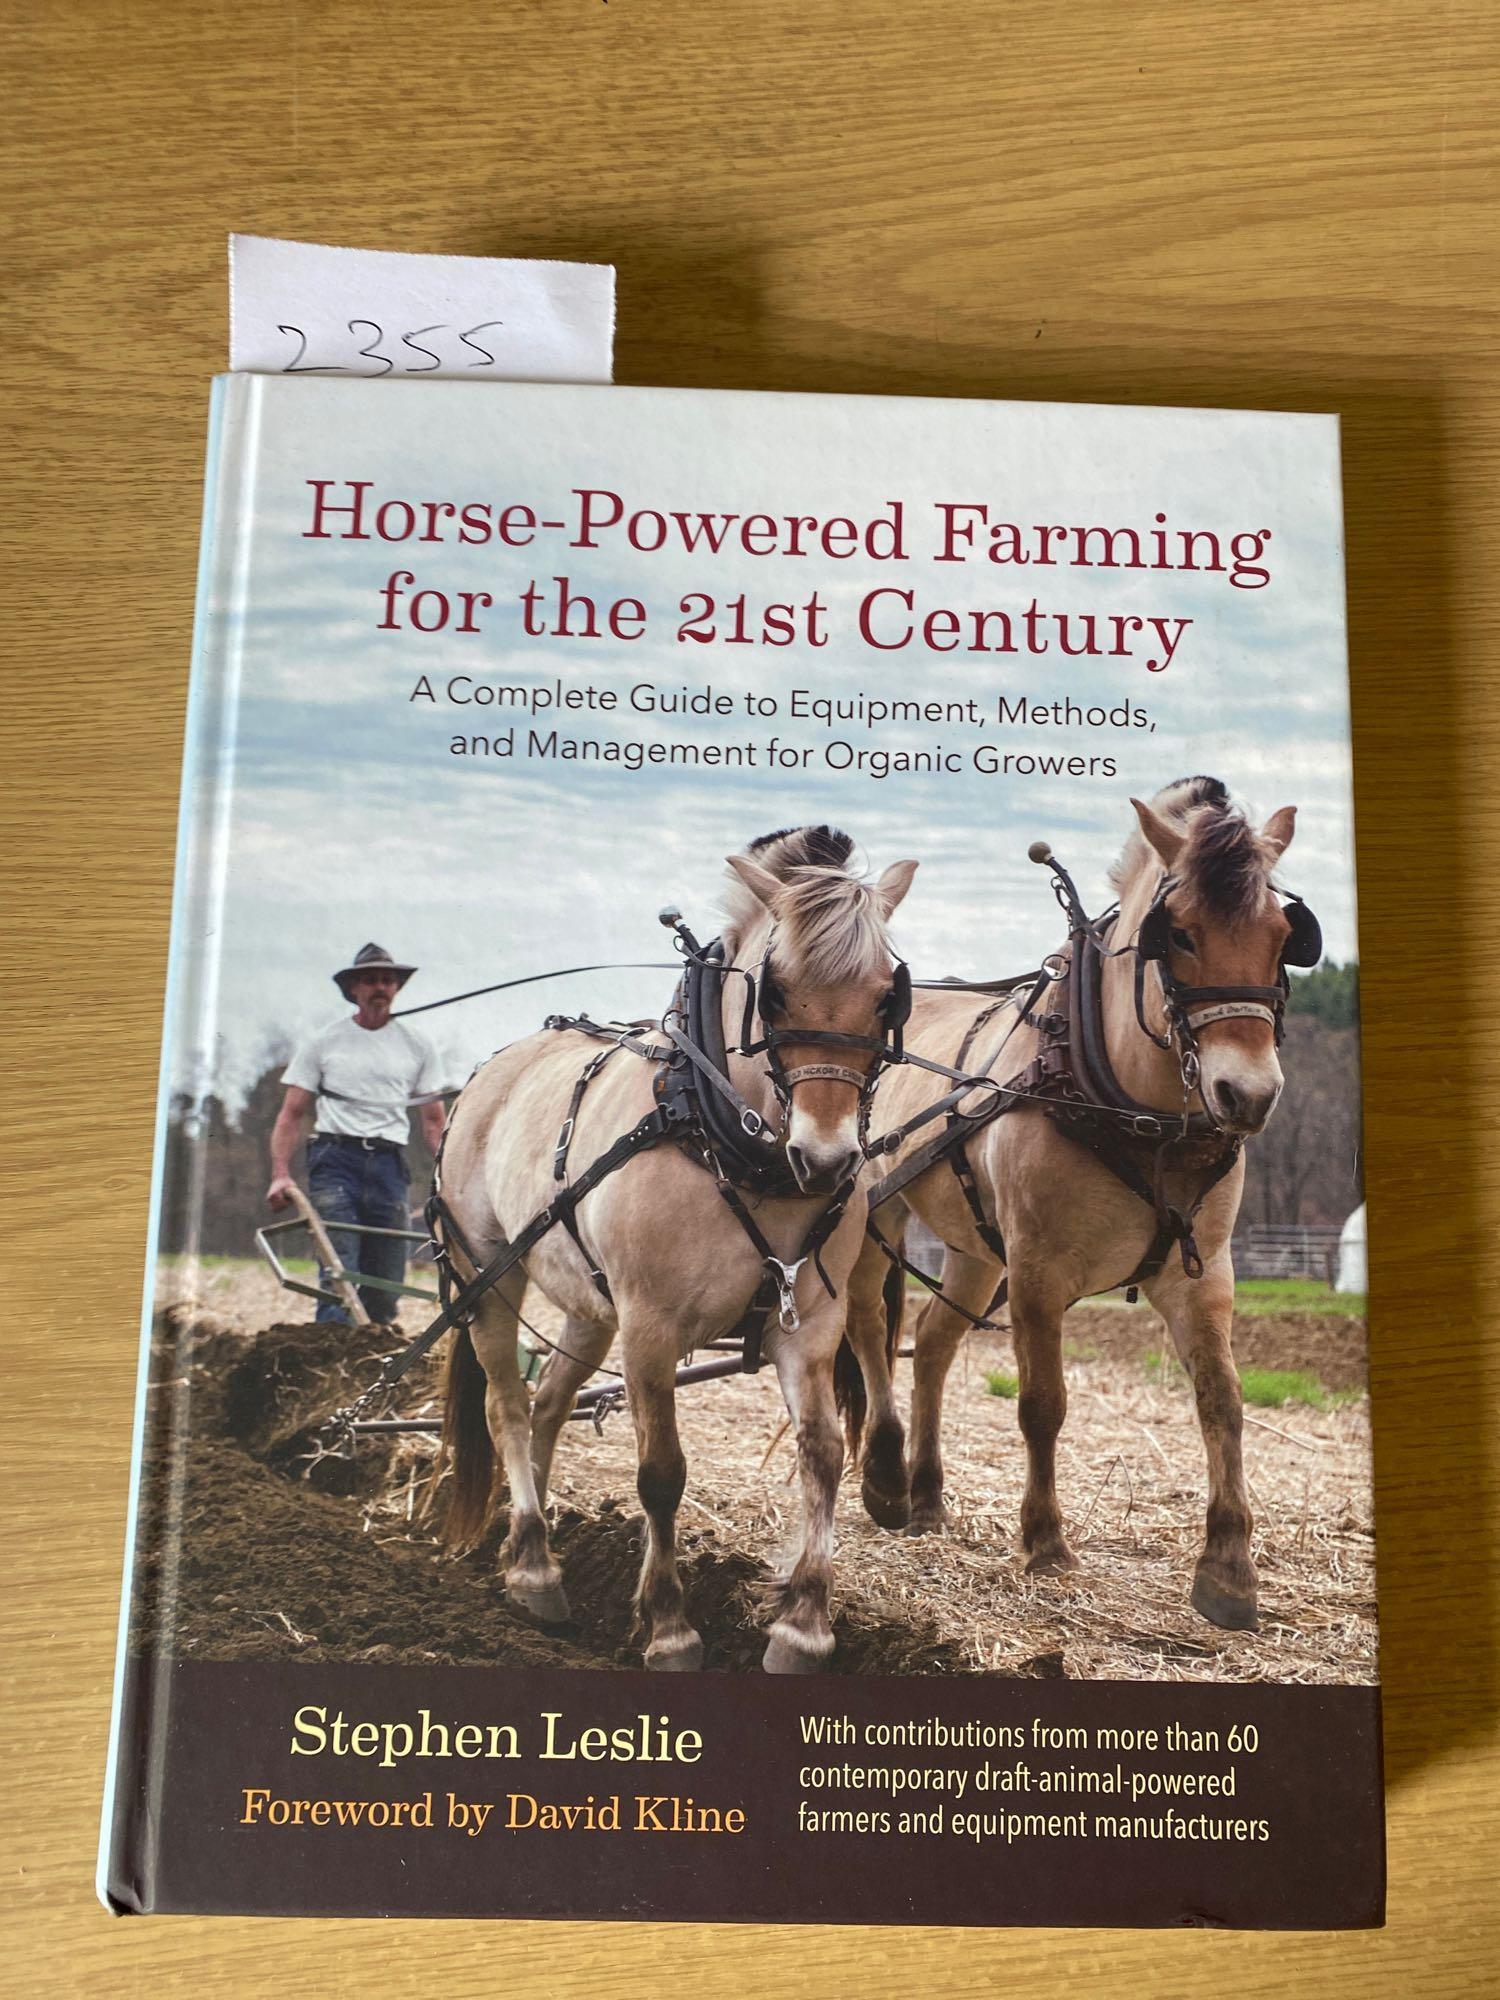 Five books on Heavy Horses